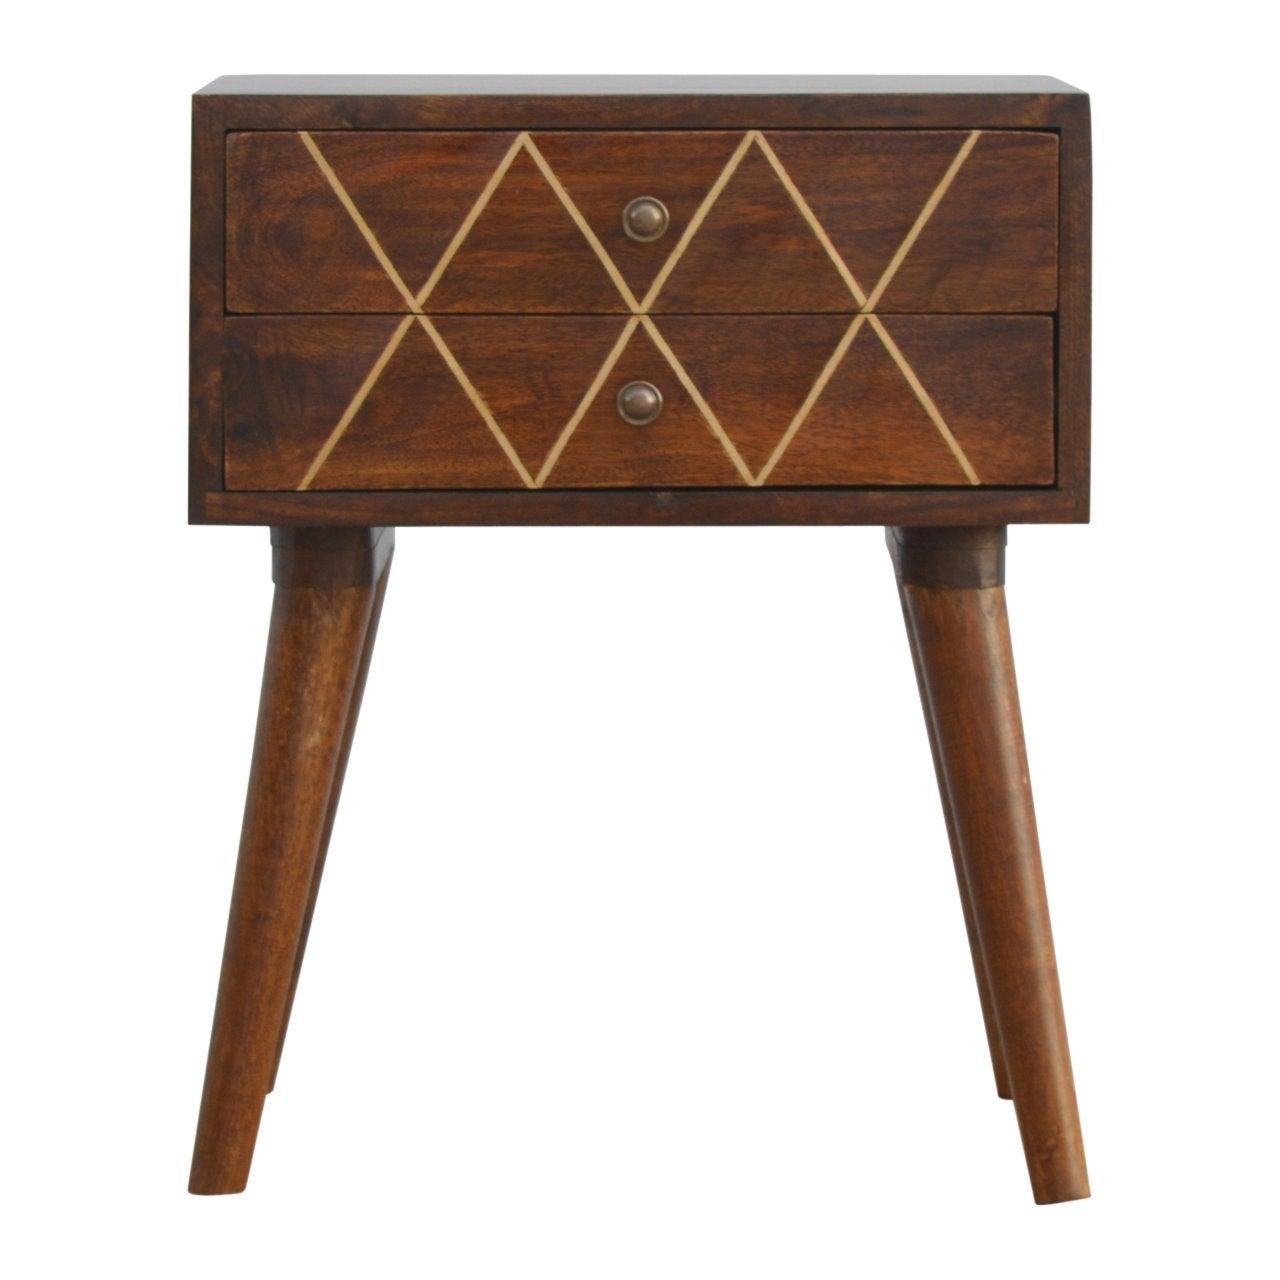 Geometric brass inlay 2 drawer bedside table - crimblefest furniture - image 1